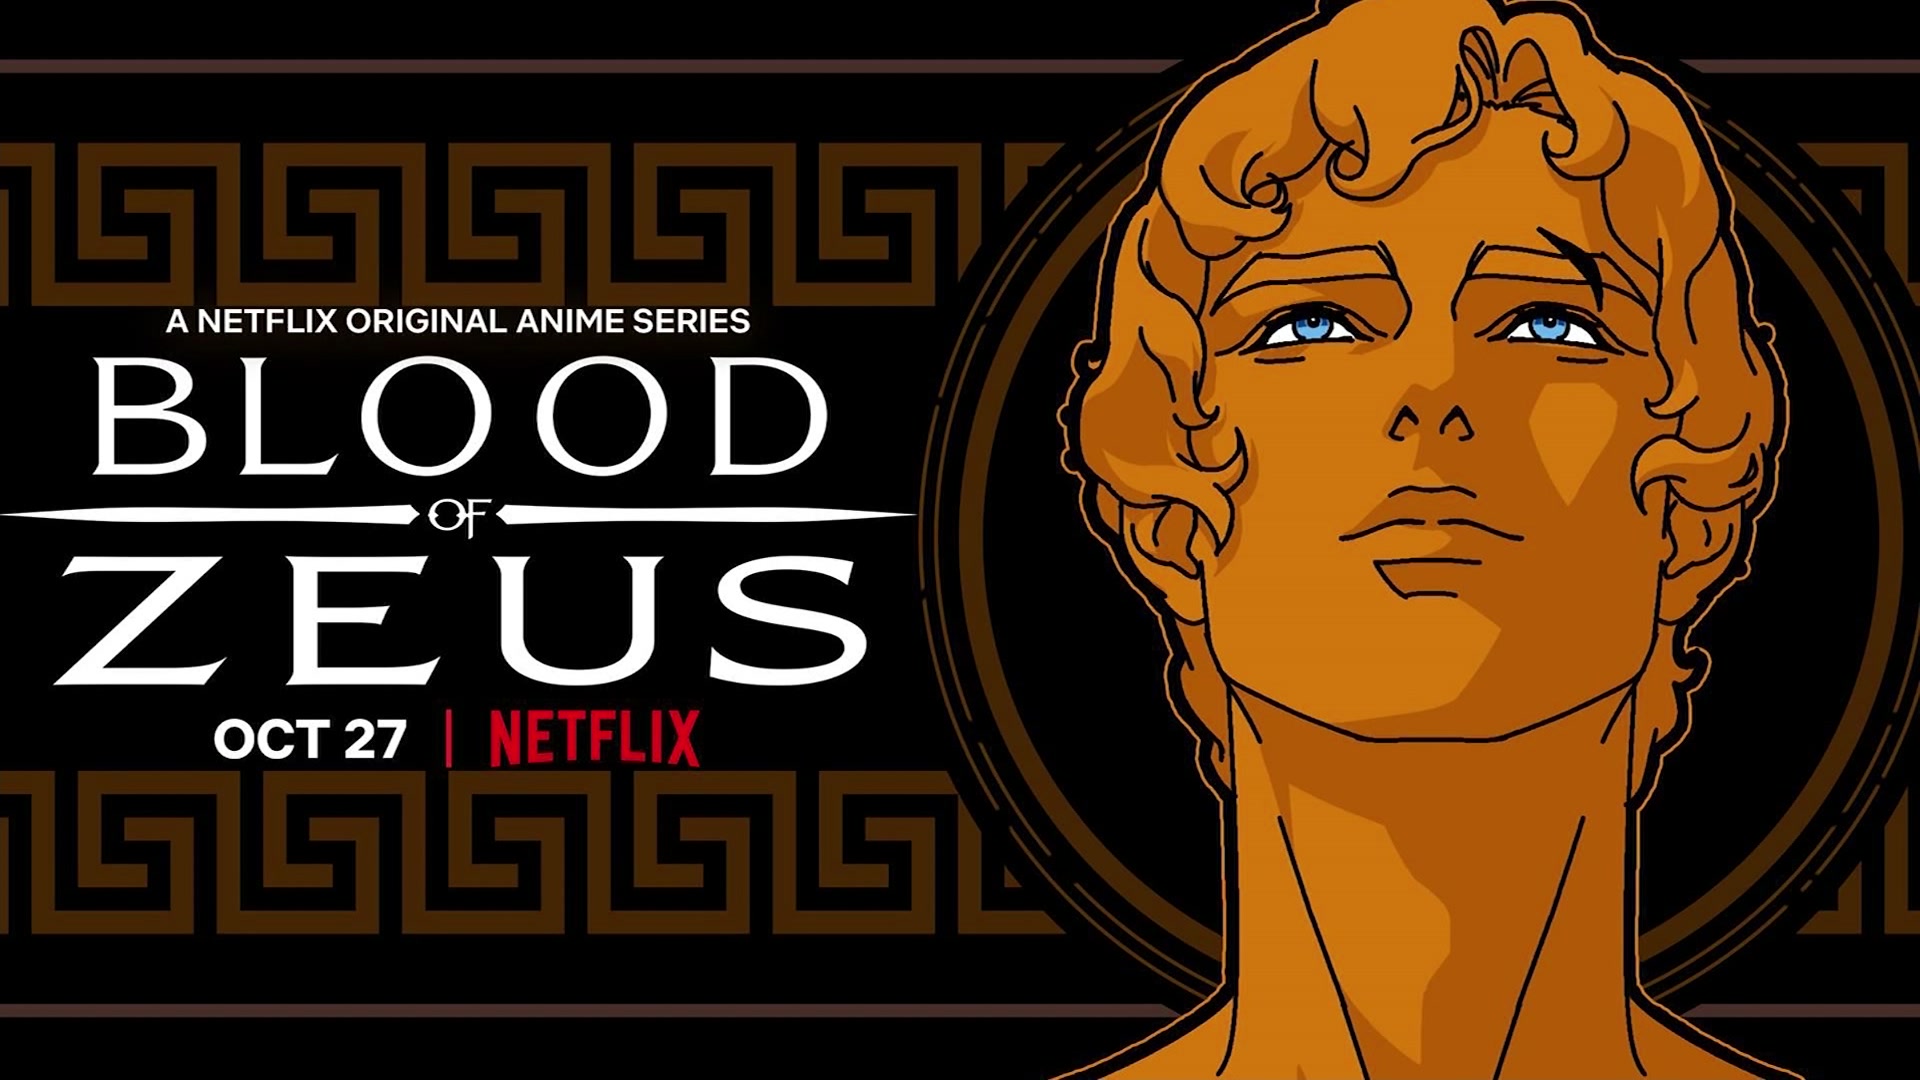 Blood of Zeus. Greek Mythology & Anime. What's not to like? – Fandom Lair